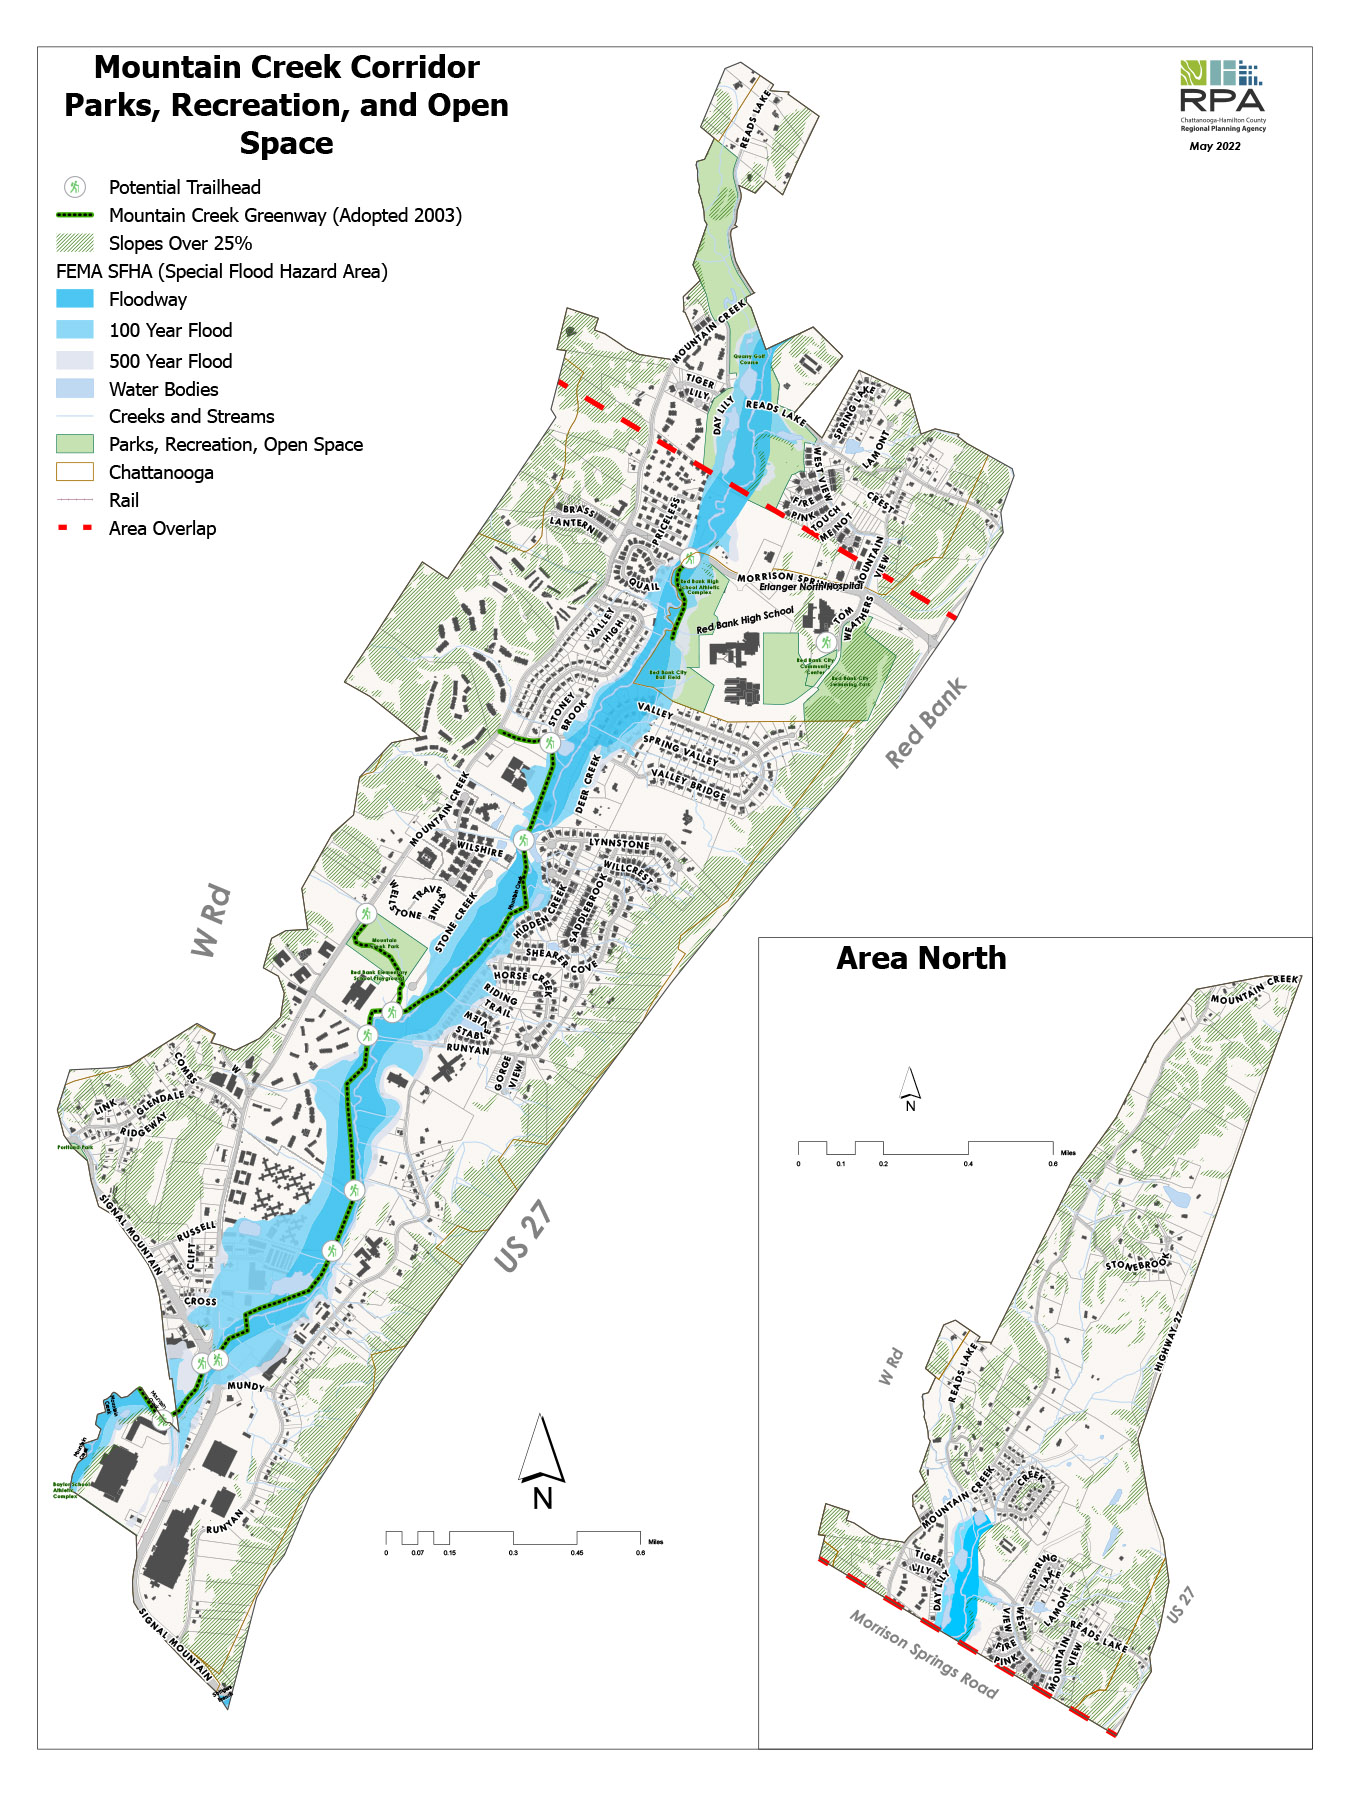 Mountain Creek Corridor Parks, Recreation, and Open Space